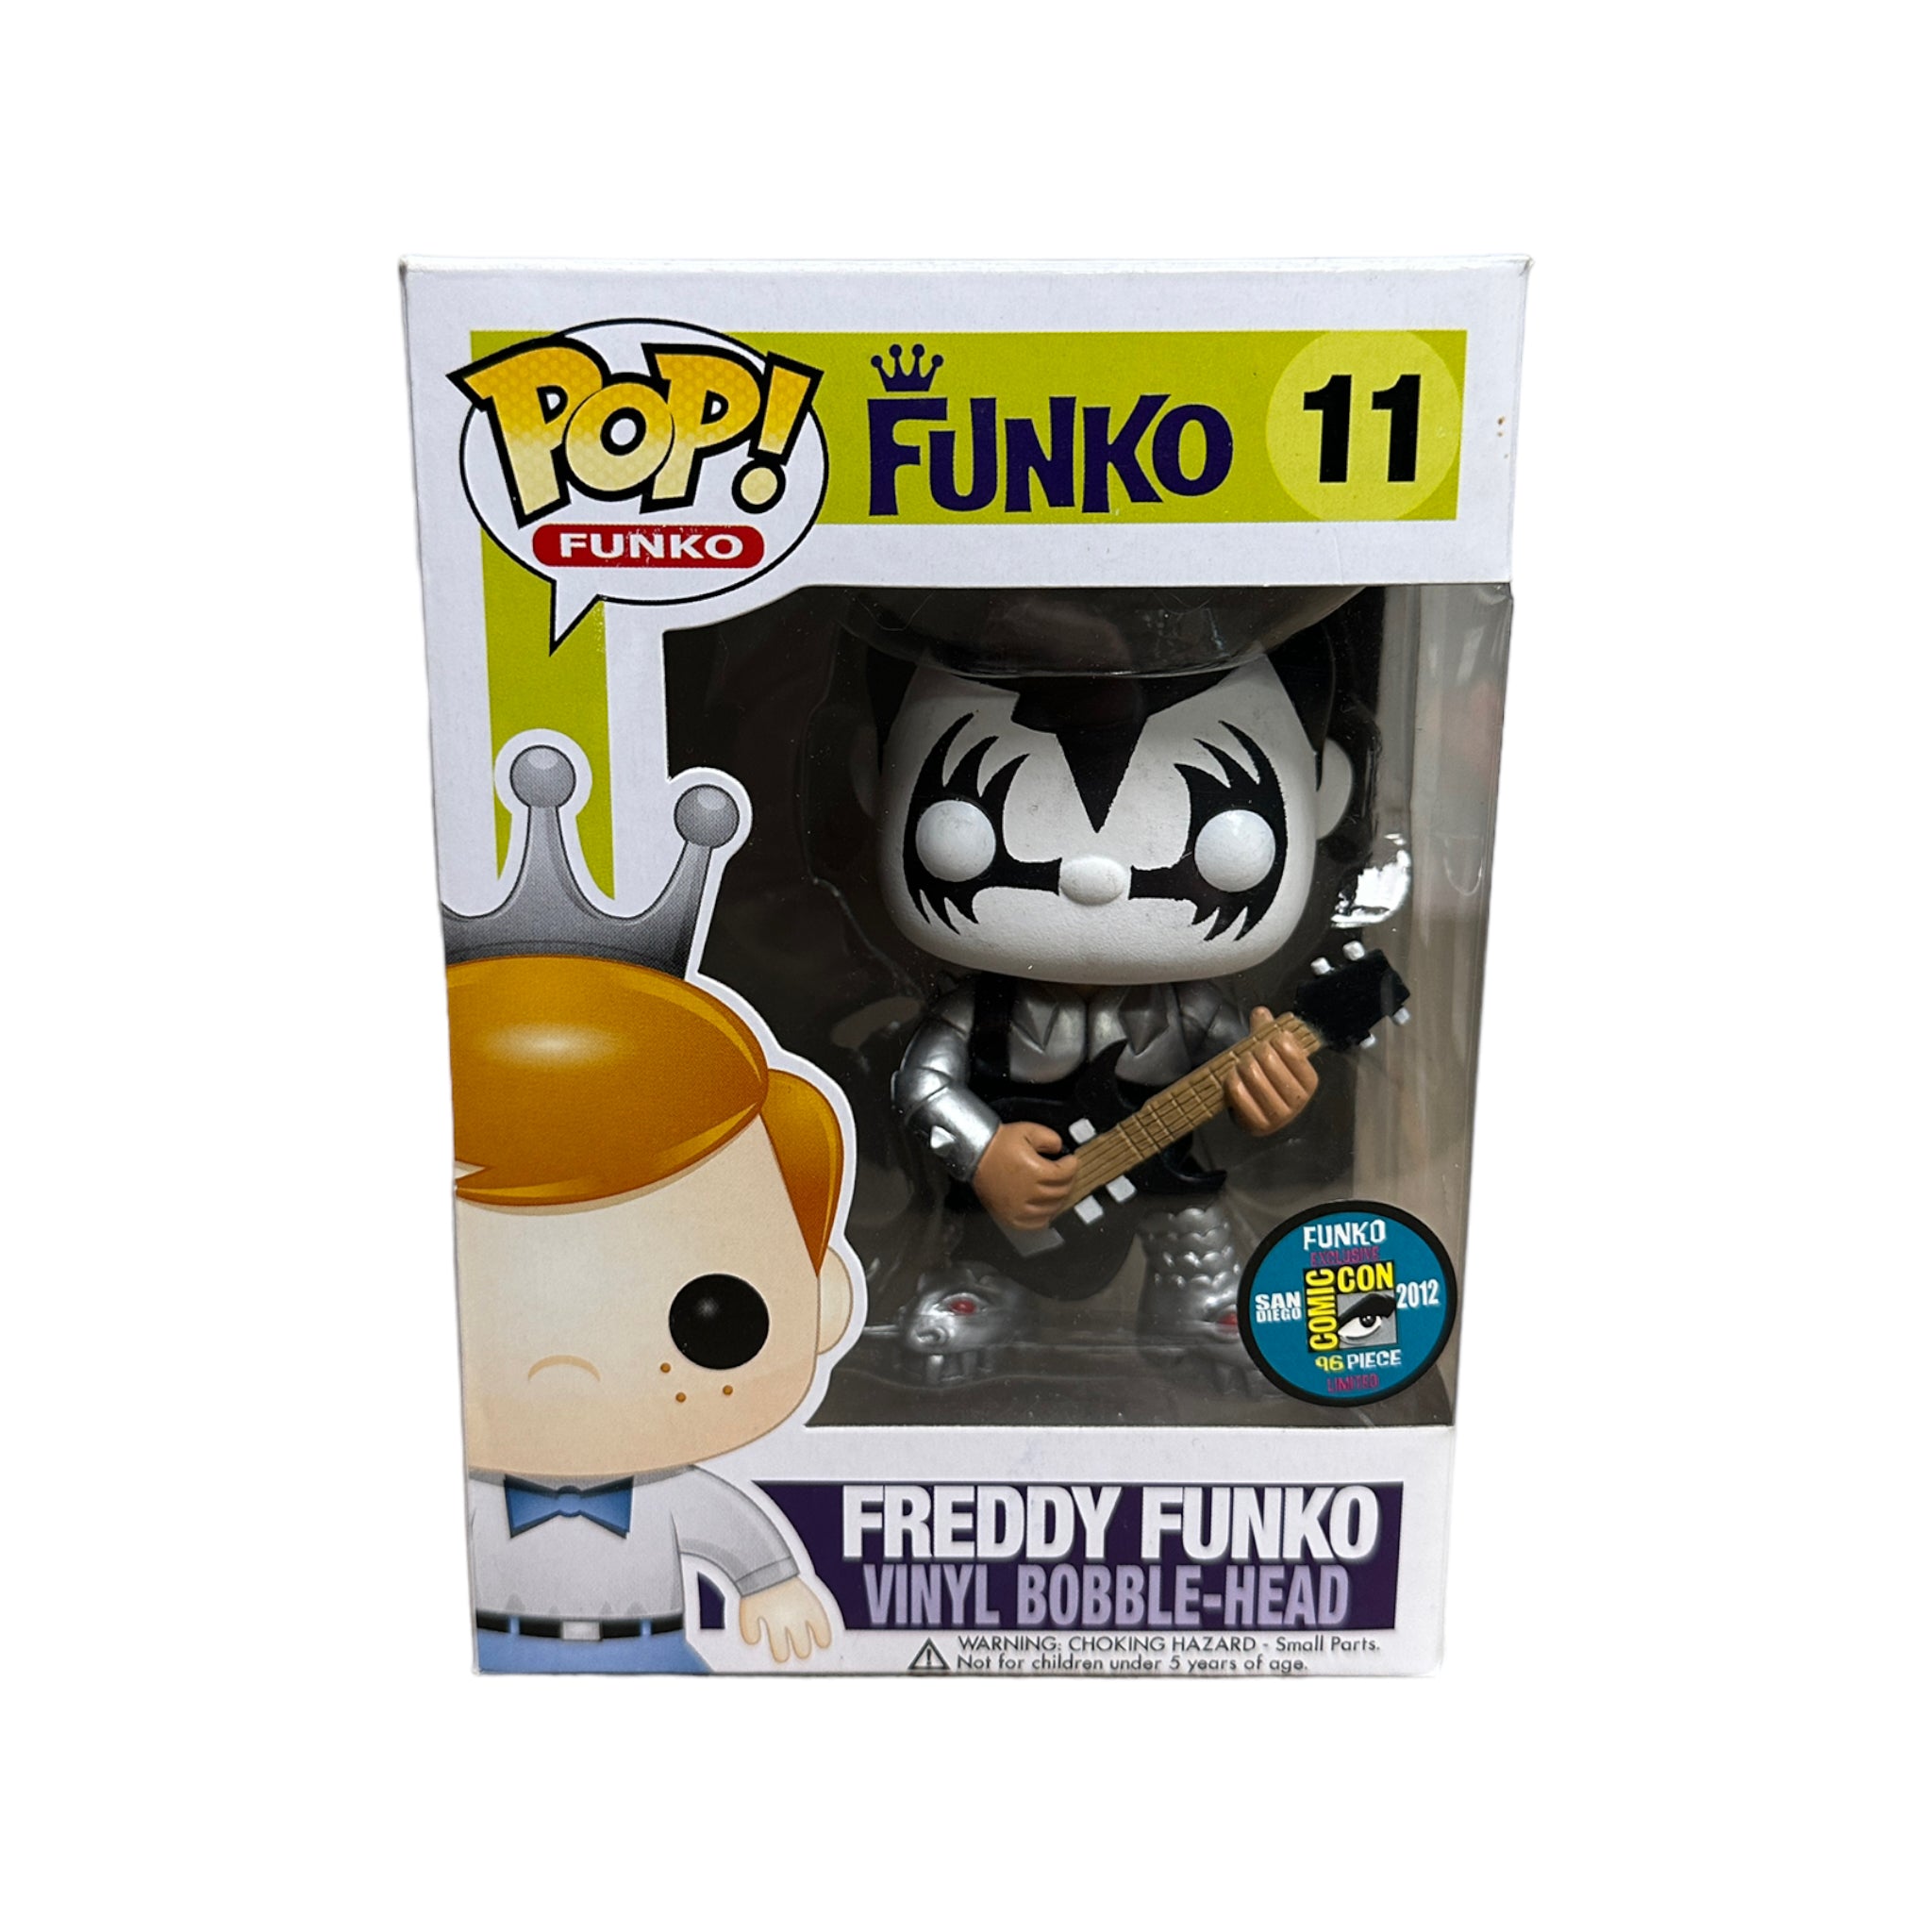 Freddy Funko as The Demon #11 Funko Pop! - SDCC 2012 Exclusive LE96 Pcs - Condition 8.5/10